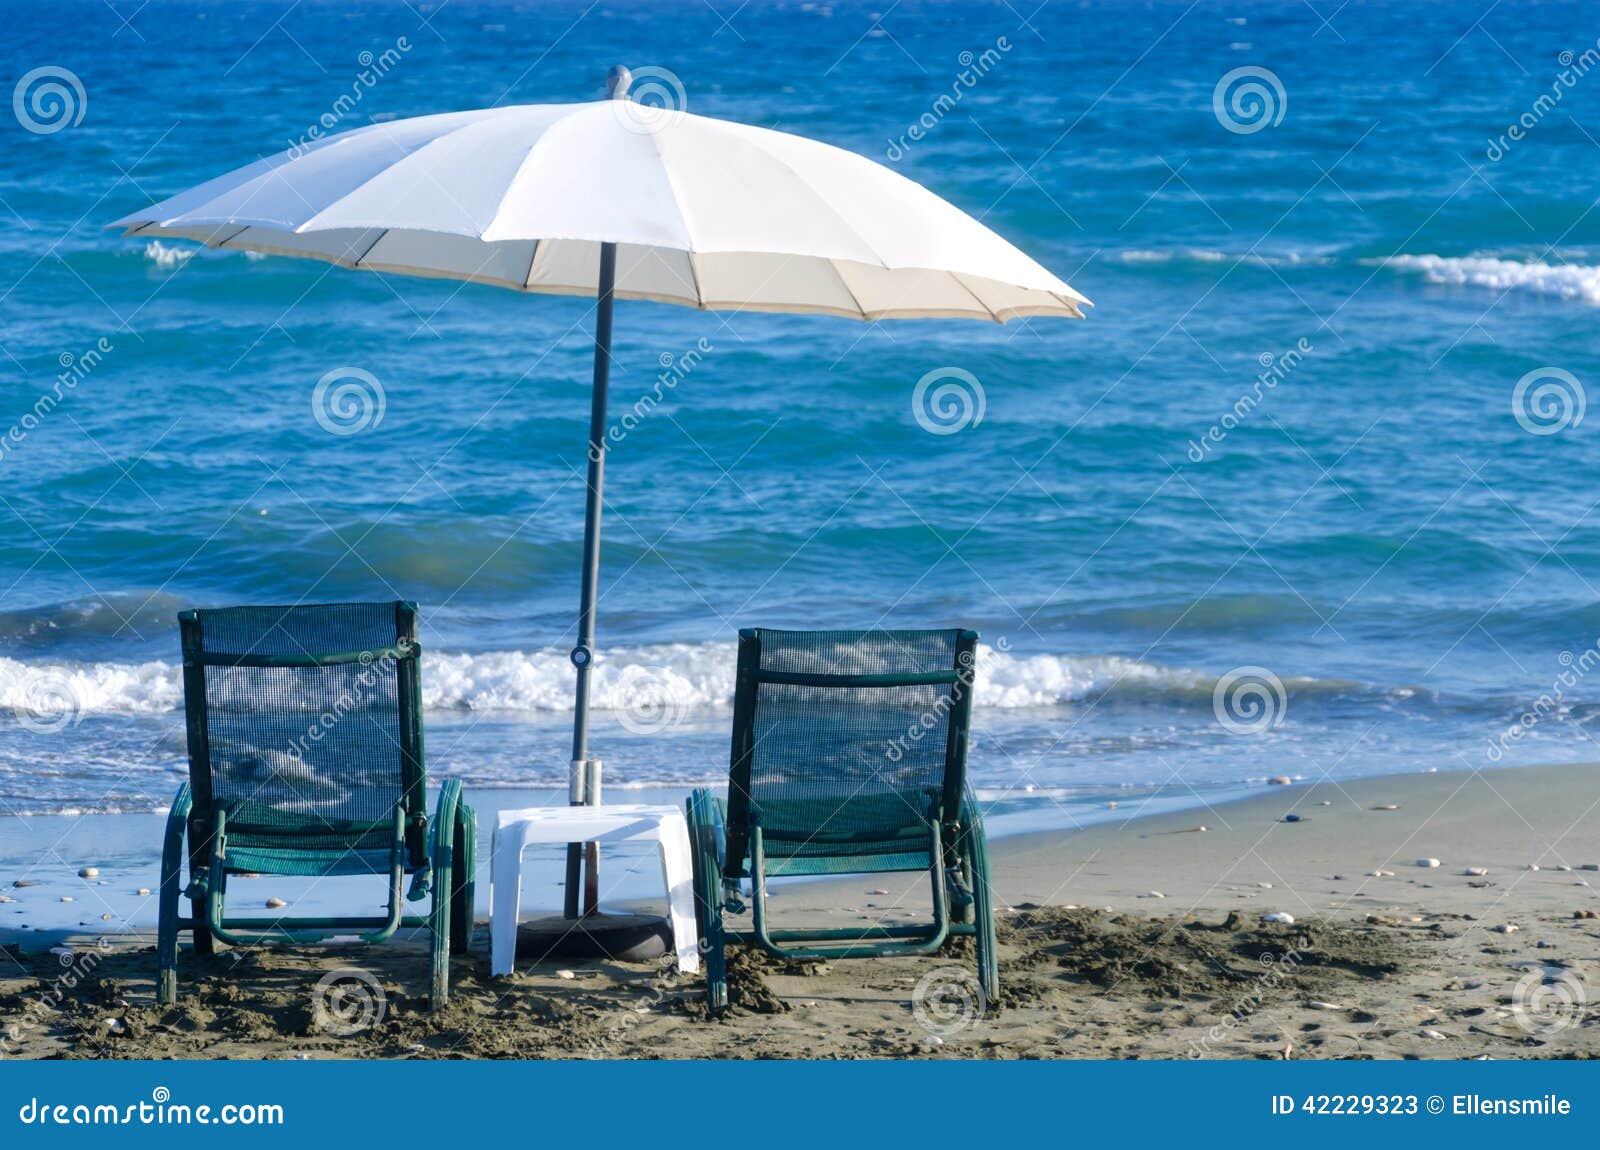 White Beach Umbrella stock image. Image of relax, color - 42229323